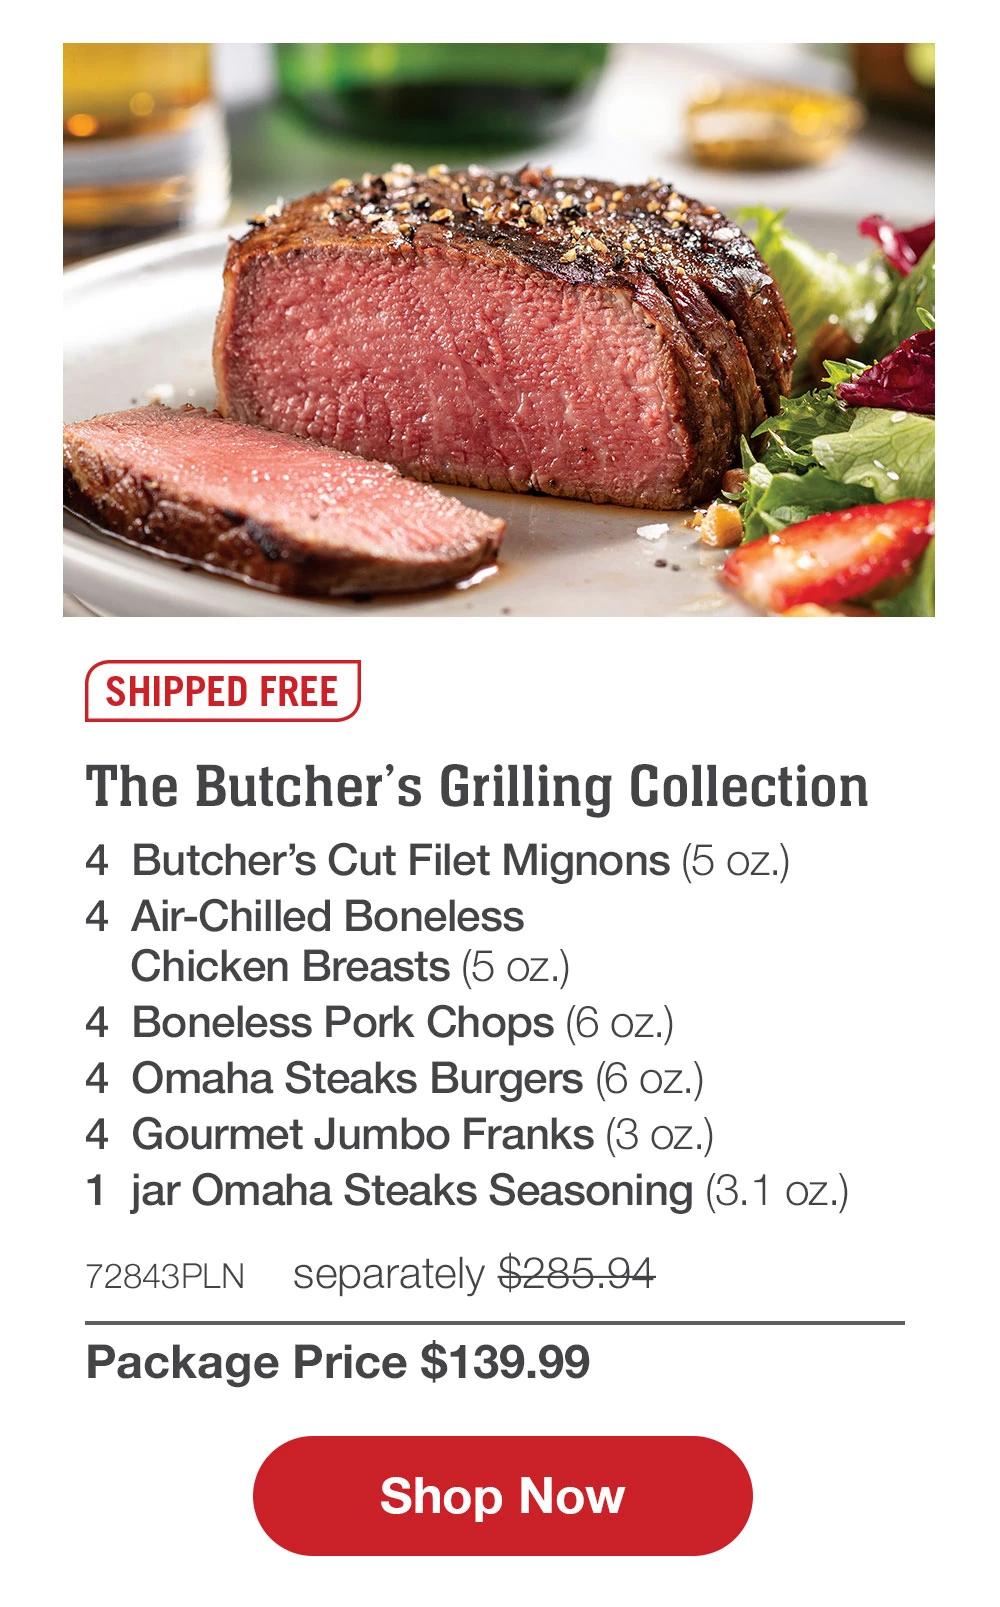 SHIPPED FREE | The Butcher's Grilling Collection - 4 Butcher's Cut Filet Mignons (5 oz.) - 4 Air-Chilled Boneless Chicken Breasts (5 oz.) - 4 Boneless Pork Chops (6 oz.) - 4 Omaha Steaks Burgers (6 oz.) - 4 Gourmet Jumbo Franks (3 oz.) - 1 jar Omaha Steaks Seasoning (3.1 oz.) - 72843PLN separately $285.94 | Package Price $139.99 || Shop Now